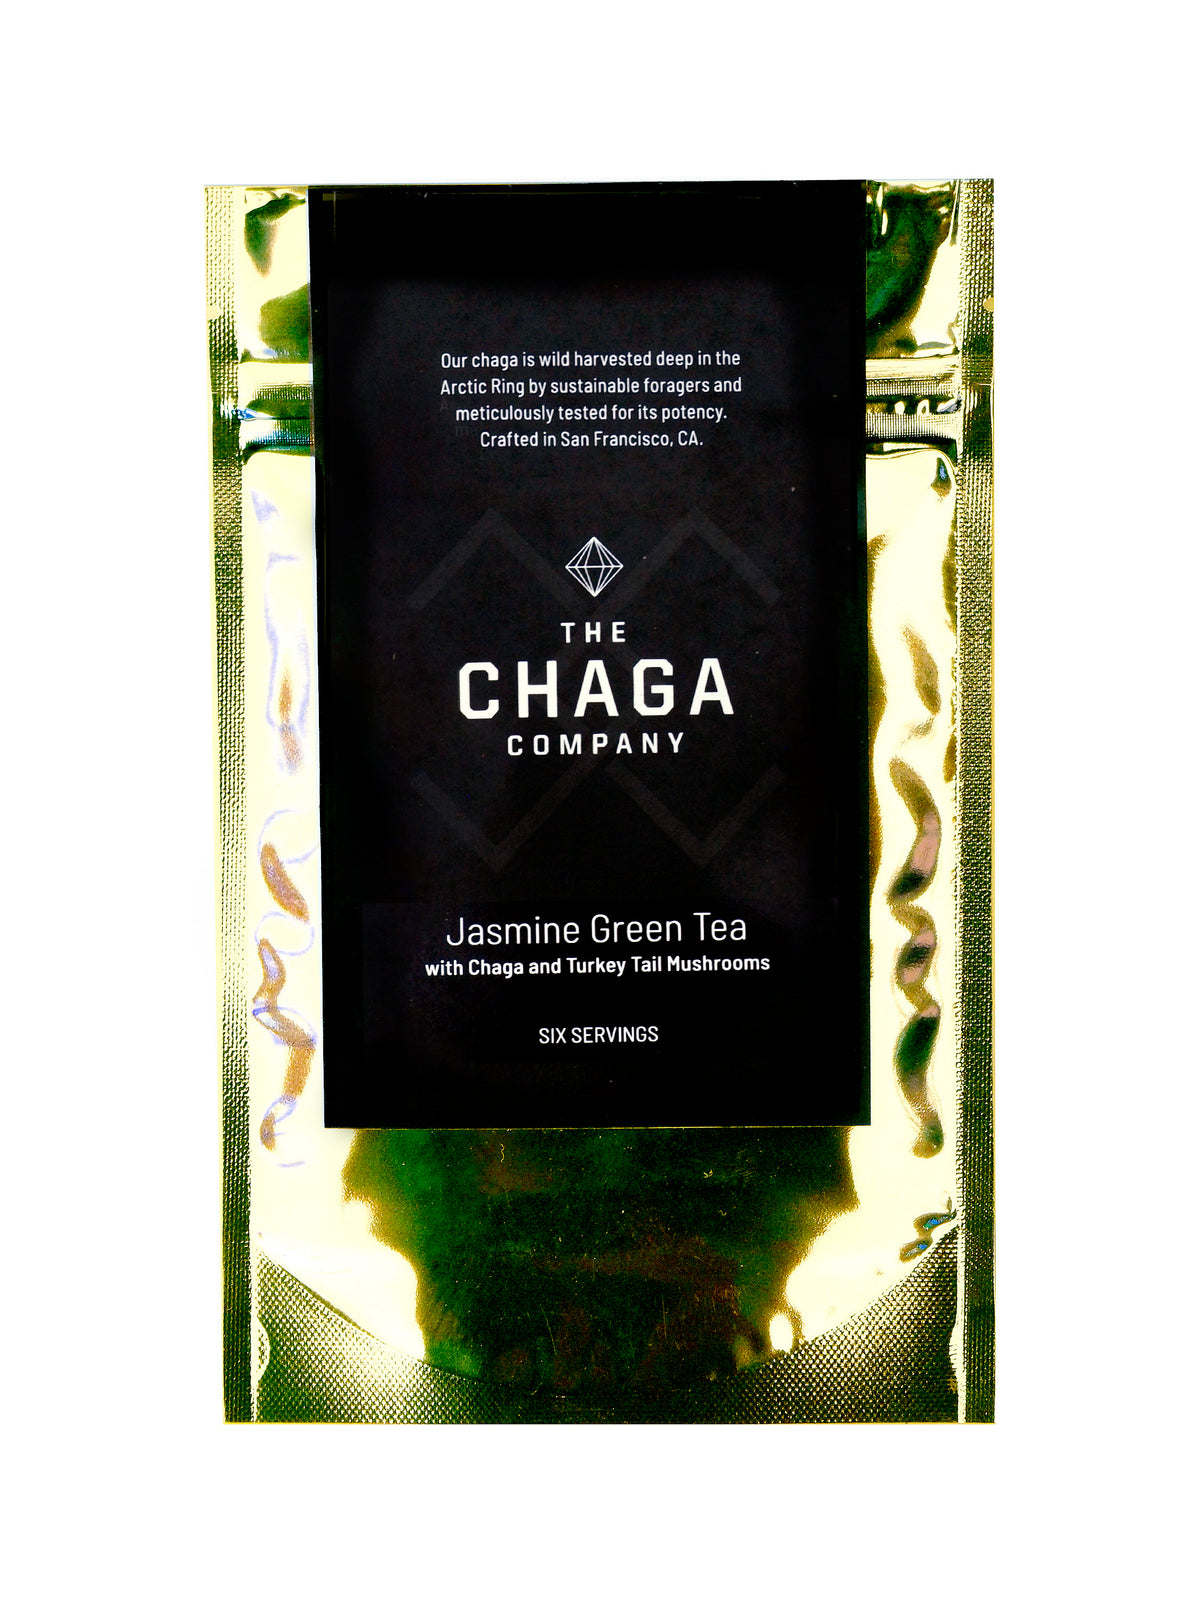 JASMINE GREEN TEA WITH CHAGA